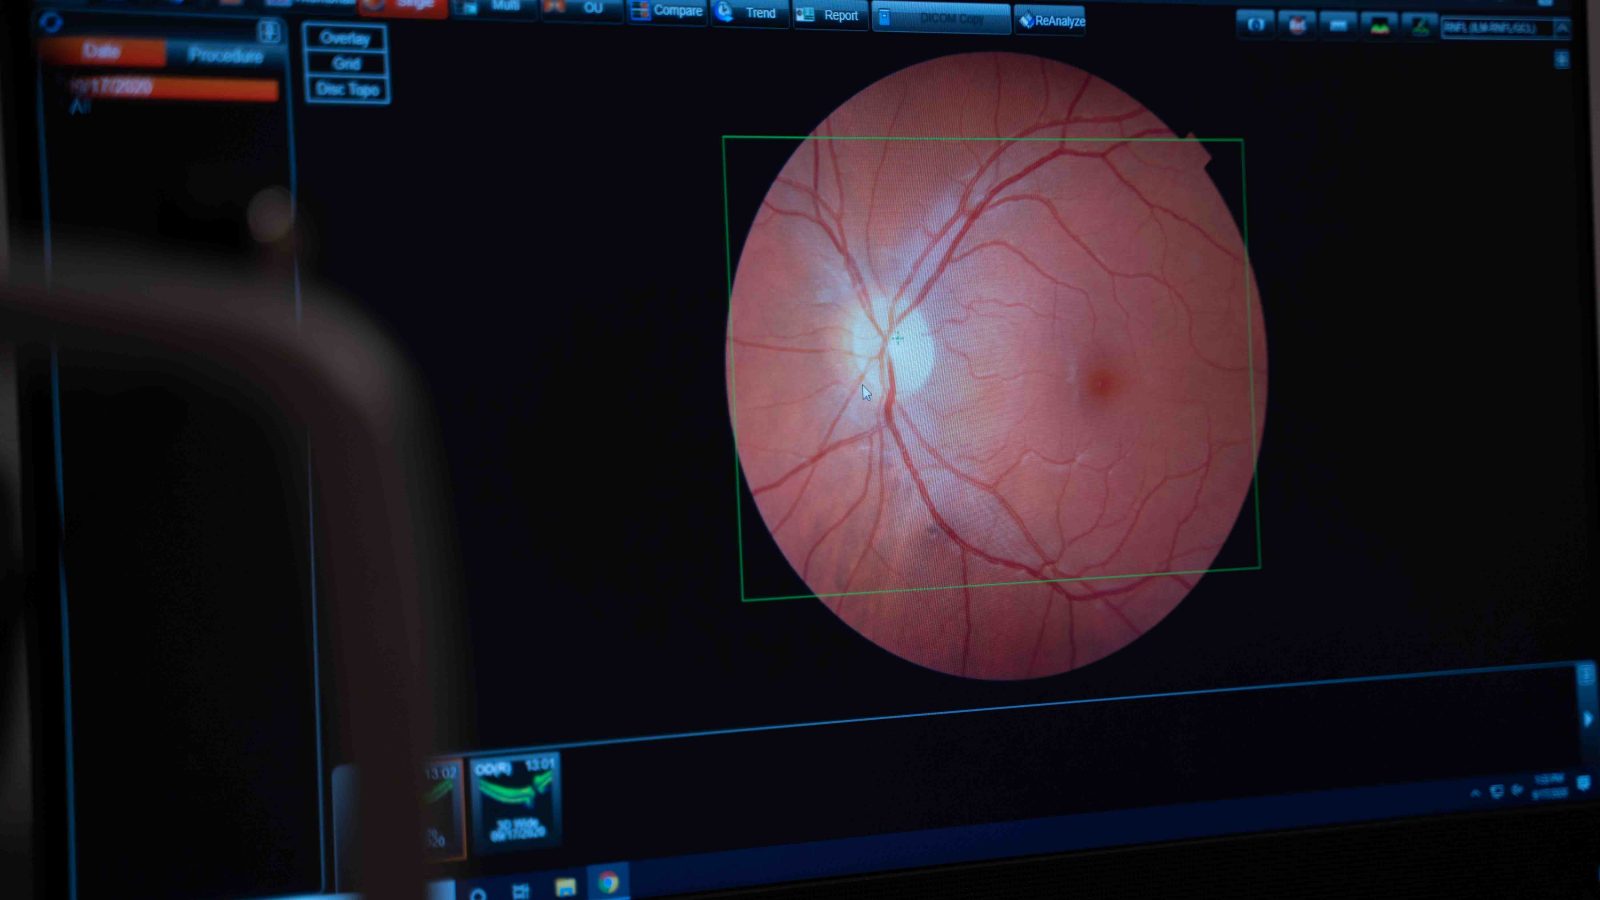 Retinal Imaging and Macular degeneration testing